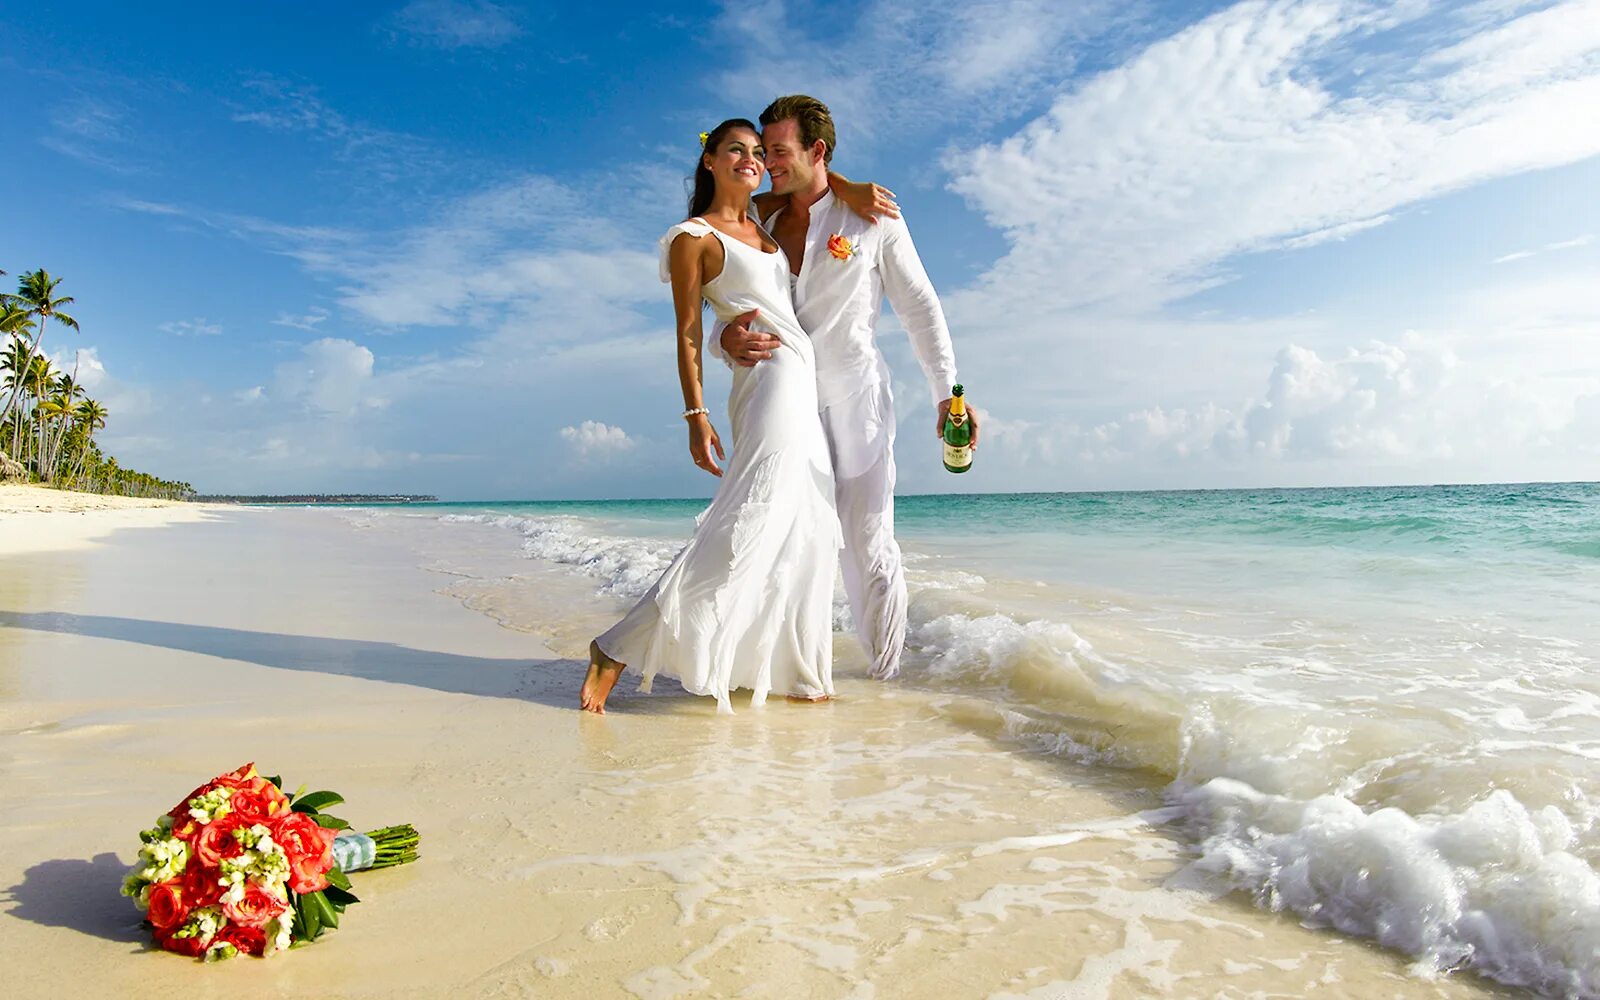 Предложение на берегу океана. Свадьба на берегу моря. Свадьба у океана. Красивая свадьба на море. Свадьба на острове.